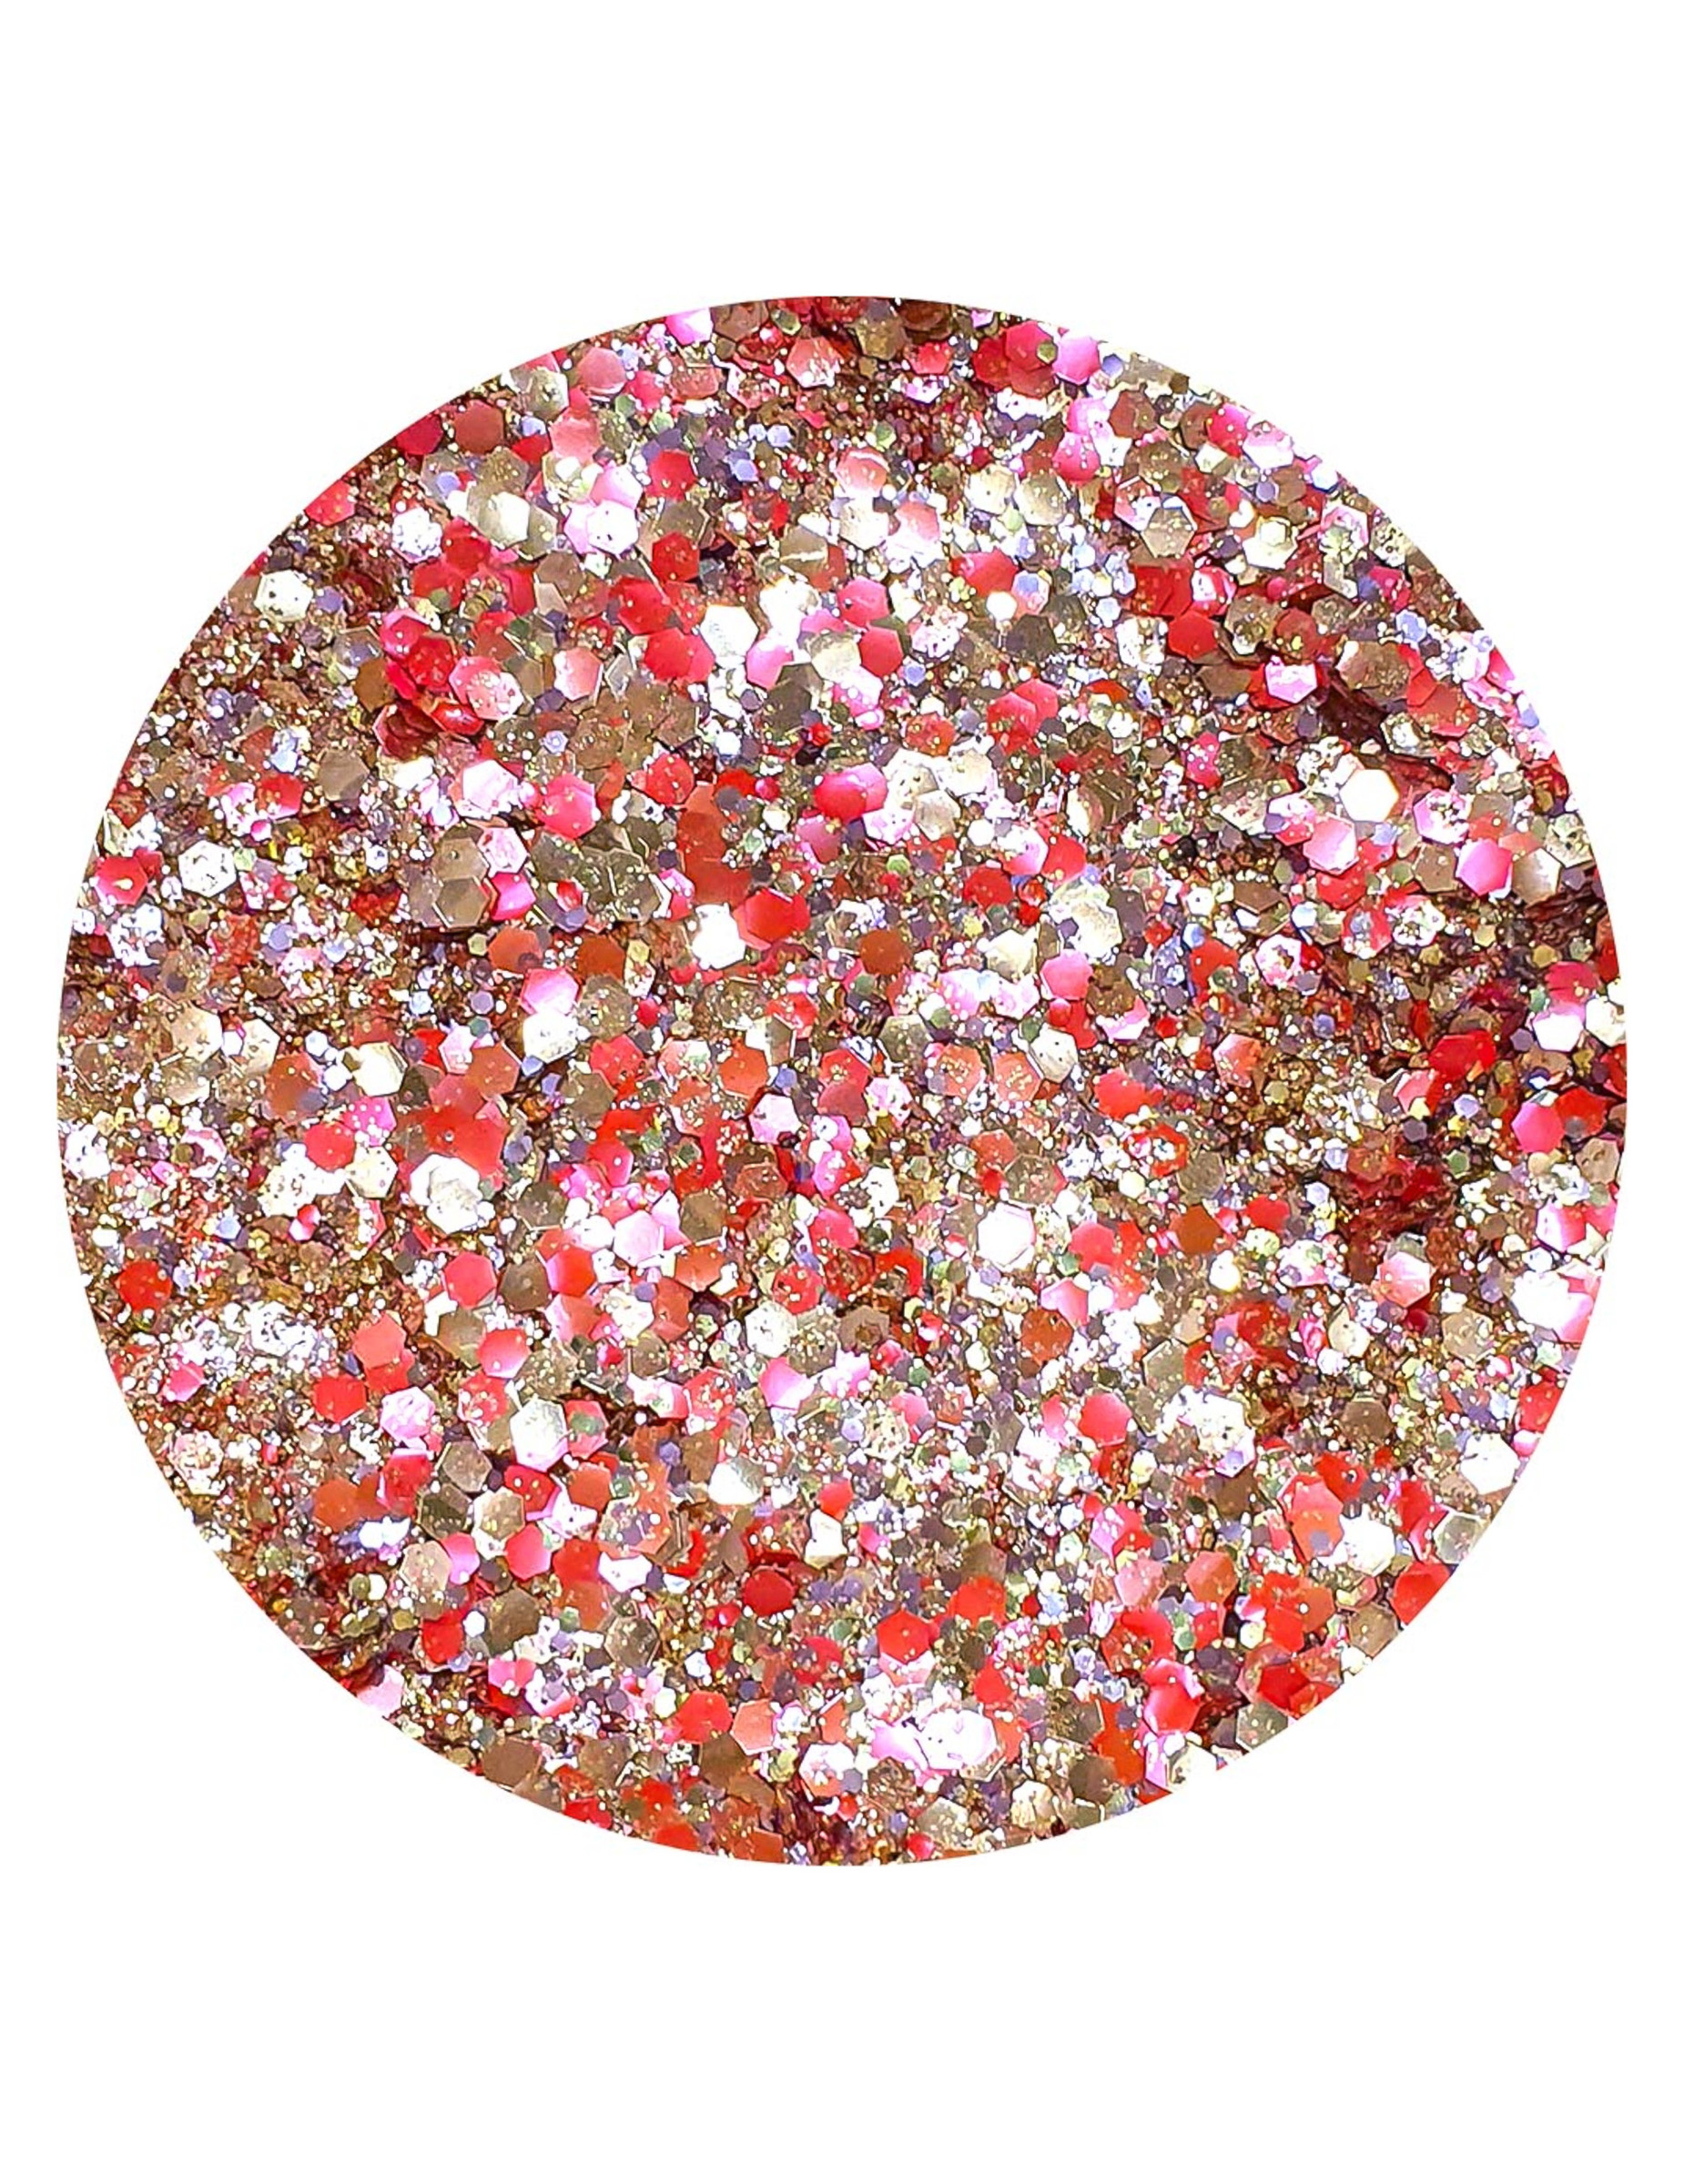 Make-Up Glitter rosegold-rot von SI SI LA PAILLETTE